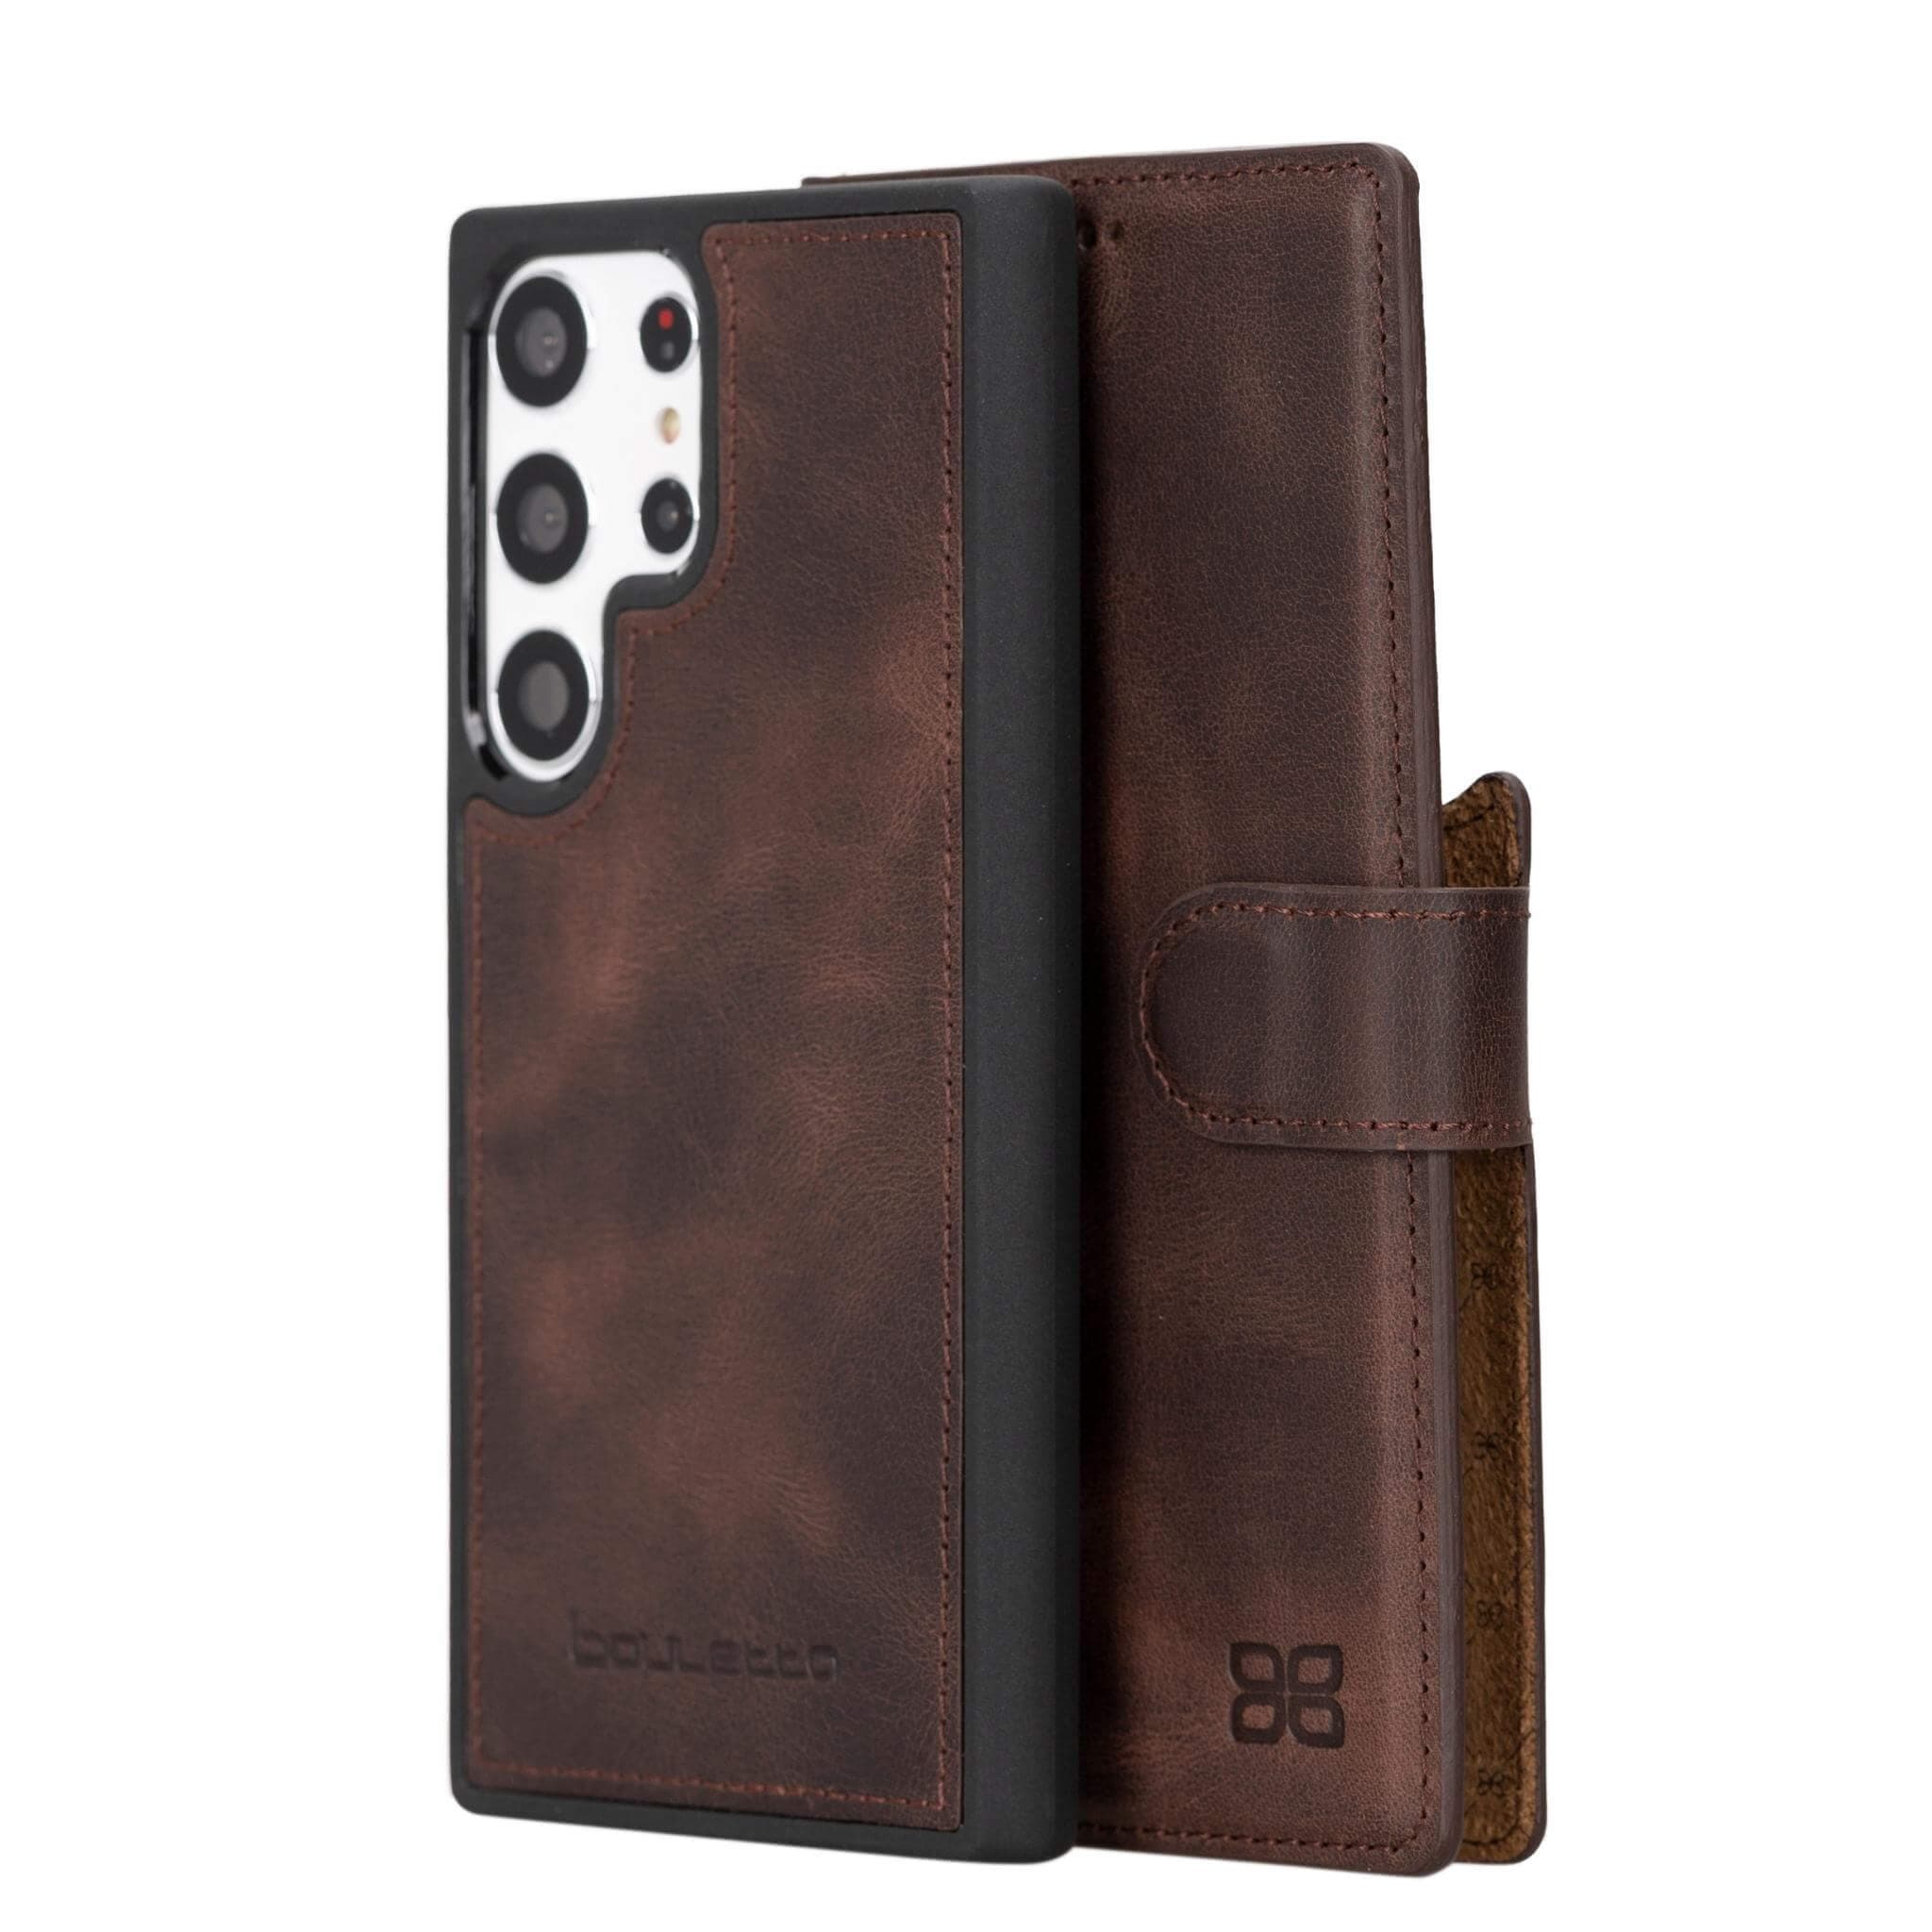 Bouletta Premium Samsung and iPhone Leather Cases - Genuine Leather